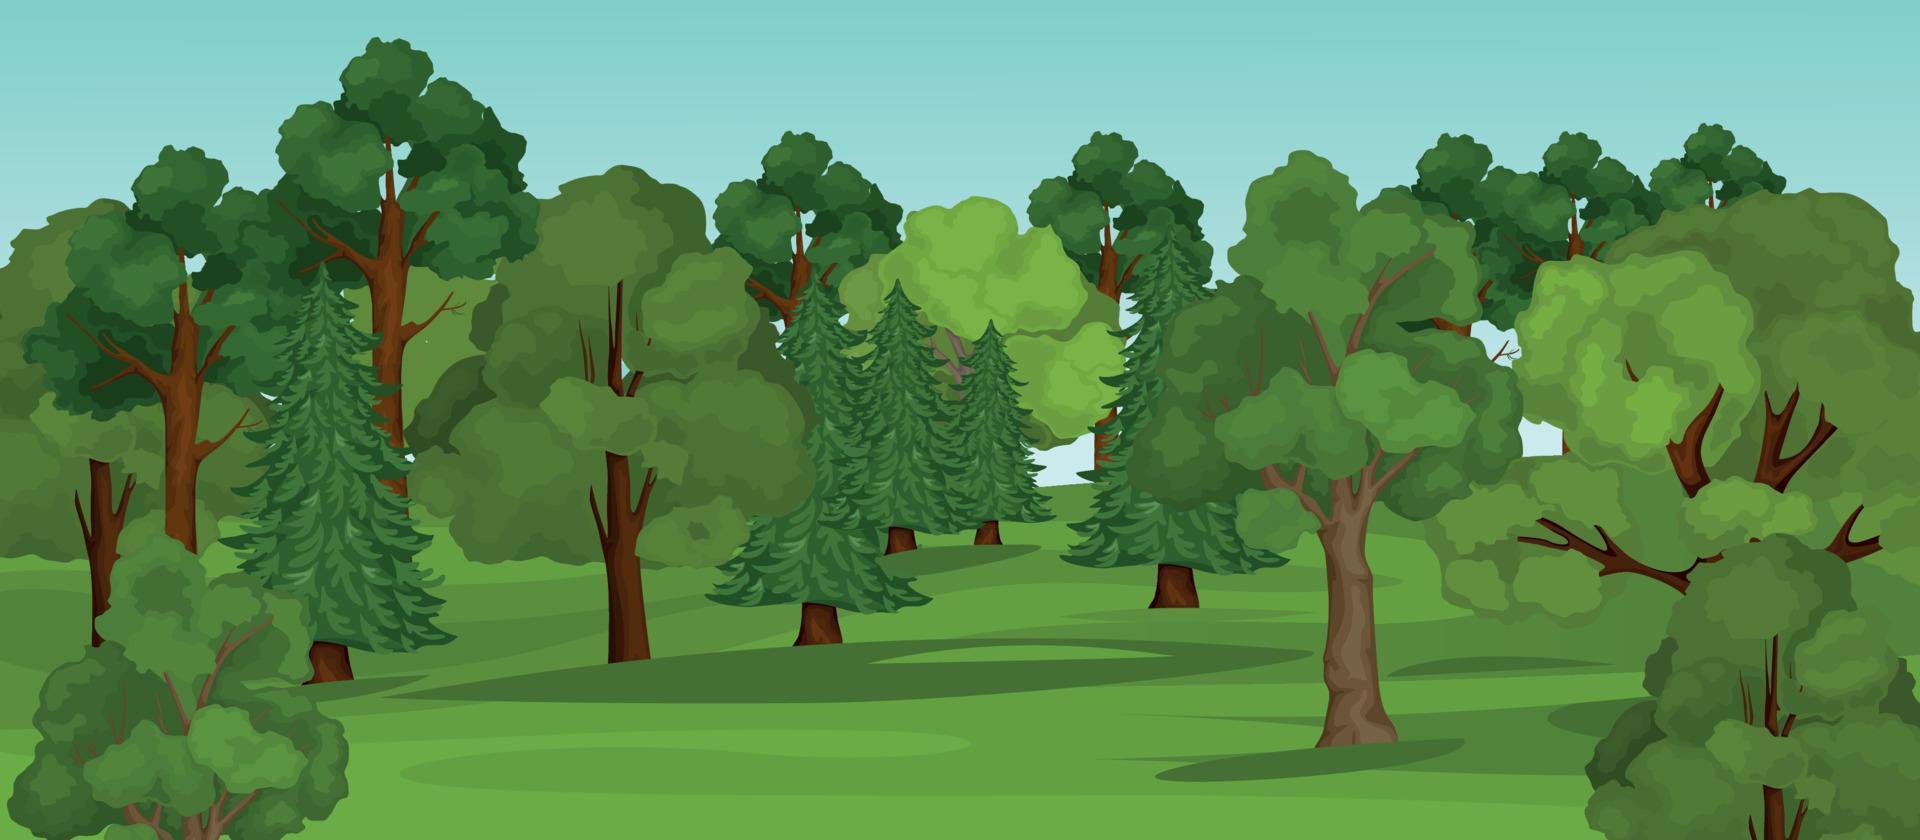 Tree Log Landscape Composition vector